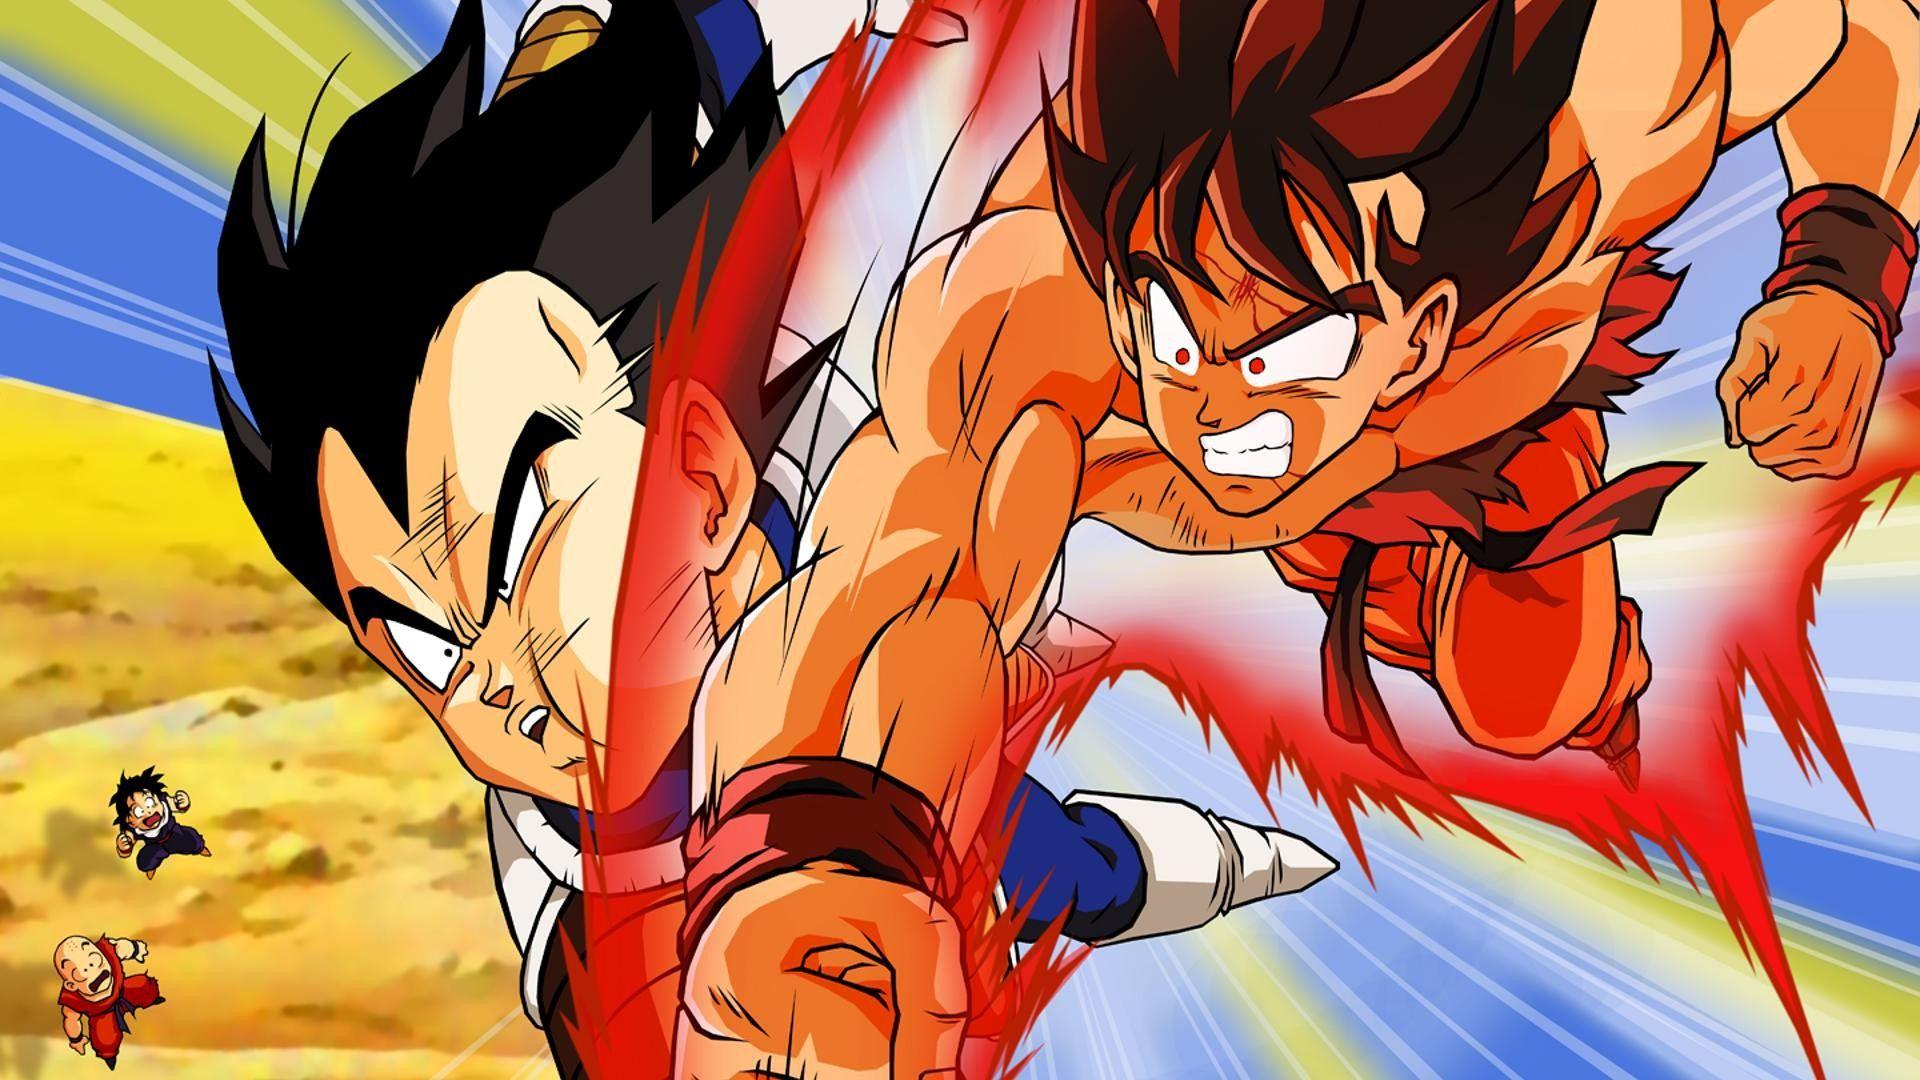 Free Goku VS Vegeta Fighting Wallpaper, Goku VS Vegeta